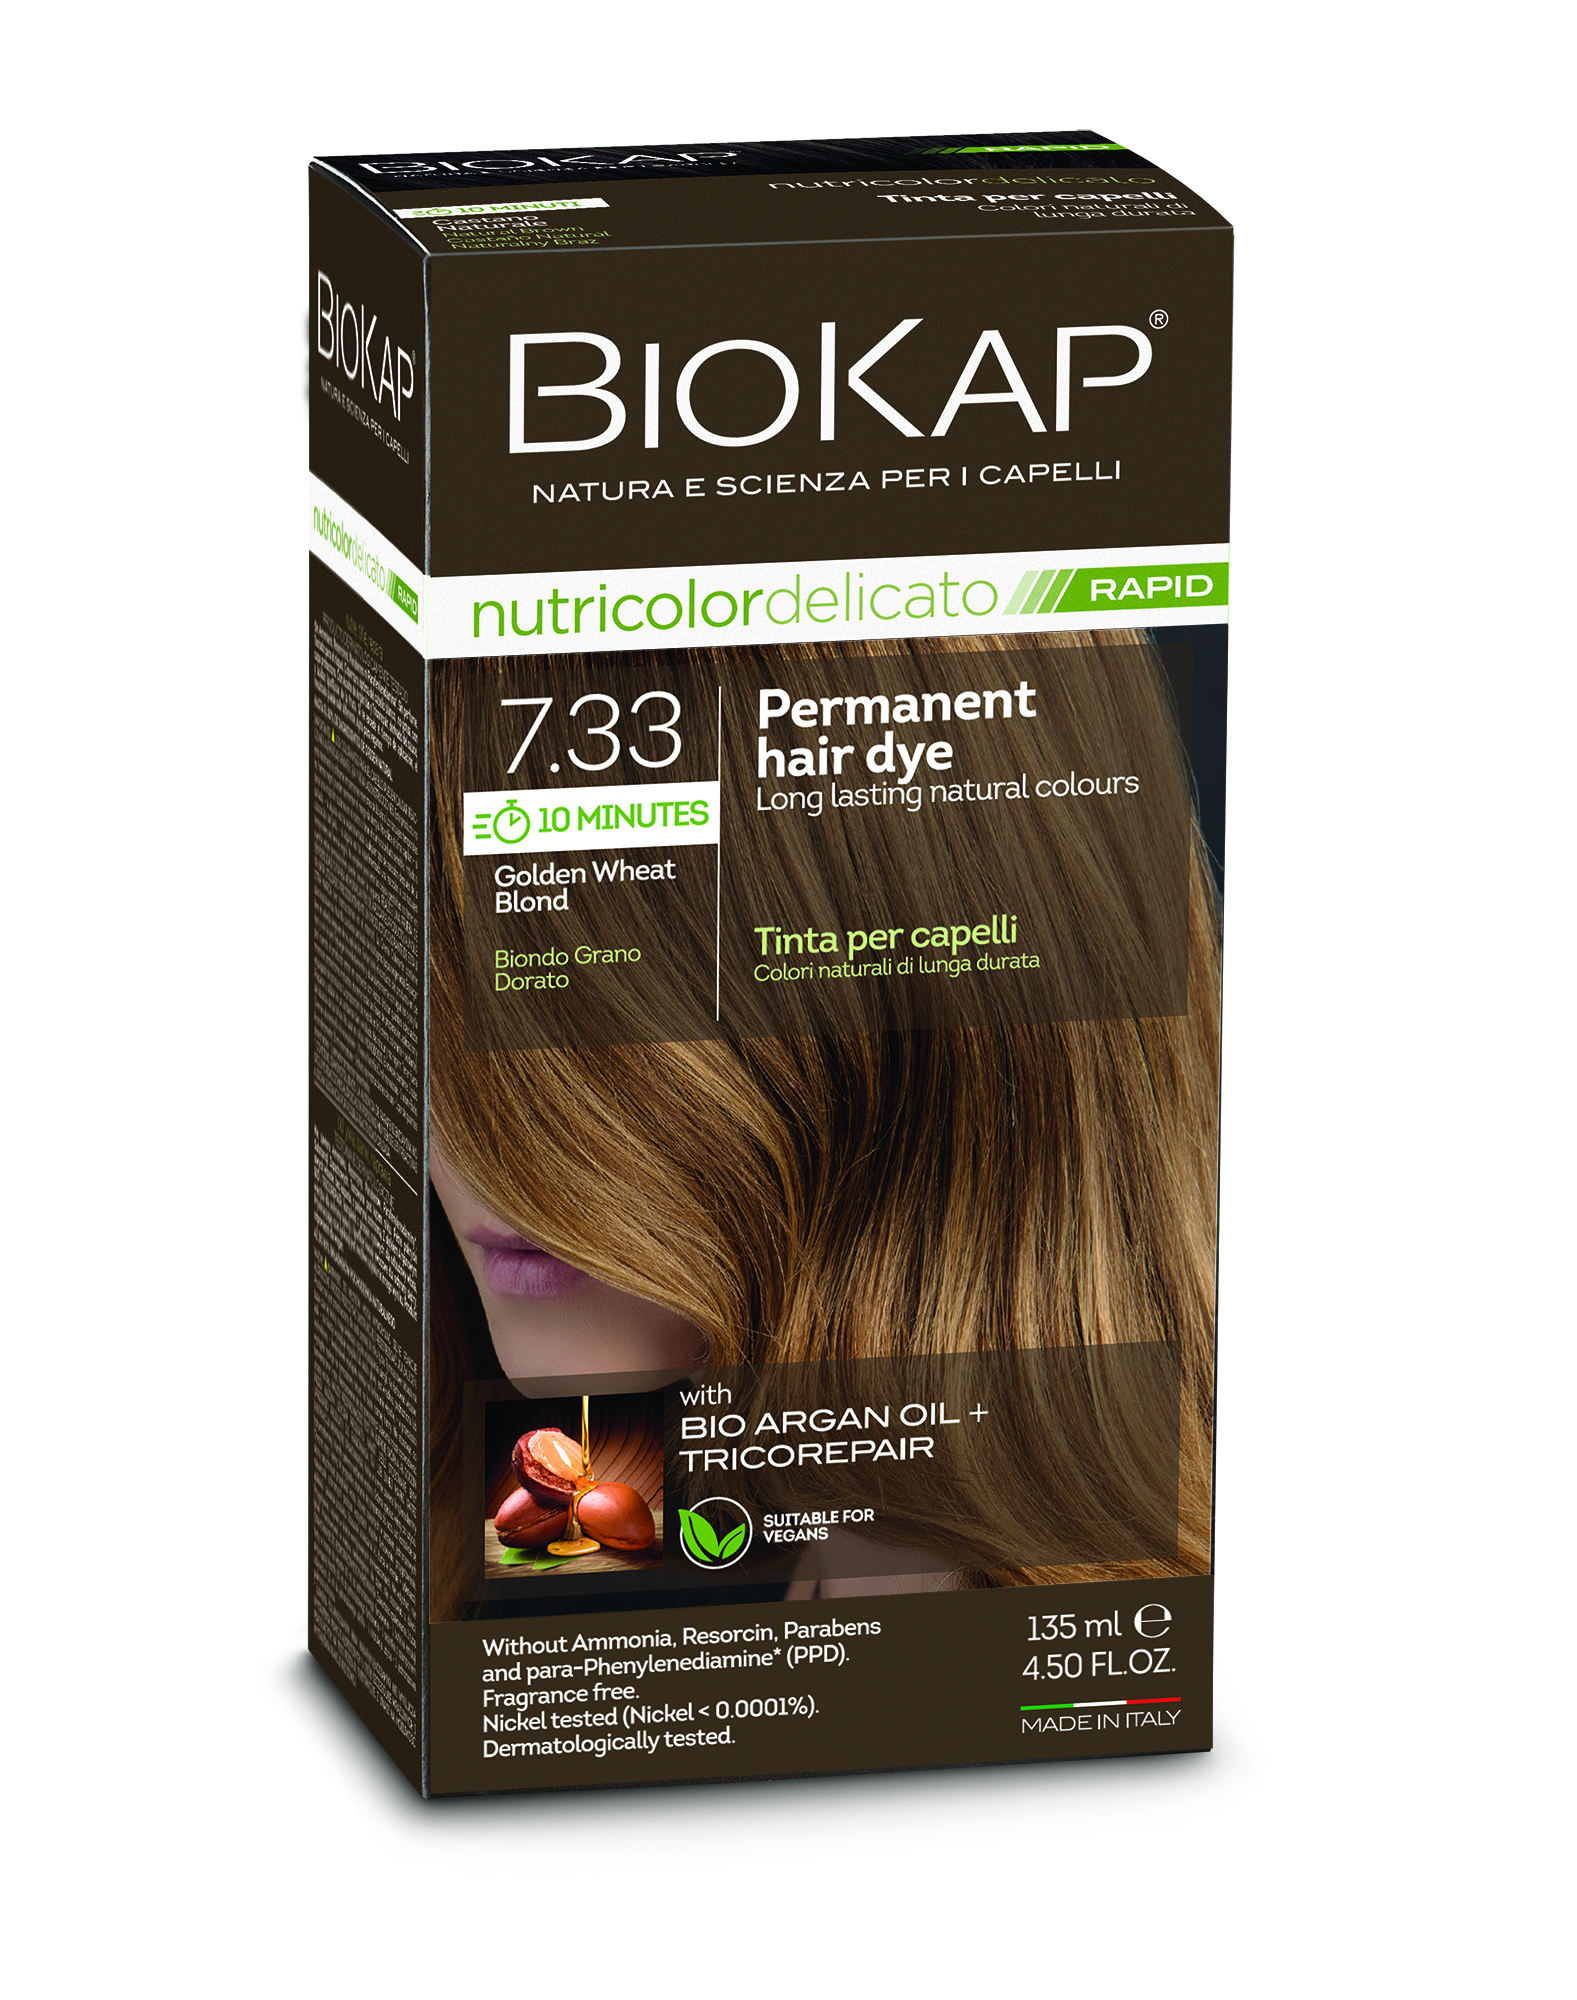 Biokap® NutricolorDelicato ///RAPID Permanent Hårfarve Pharma